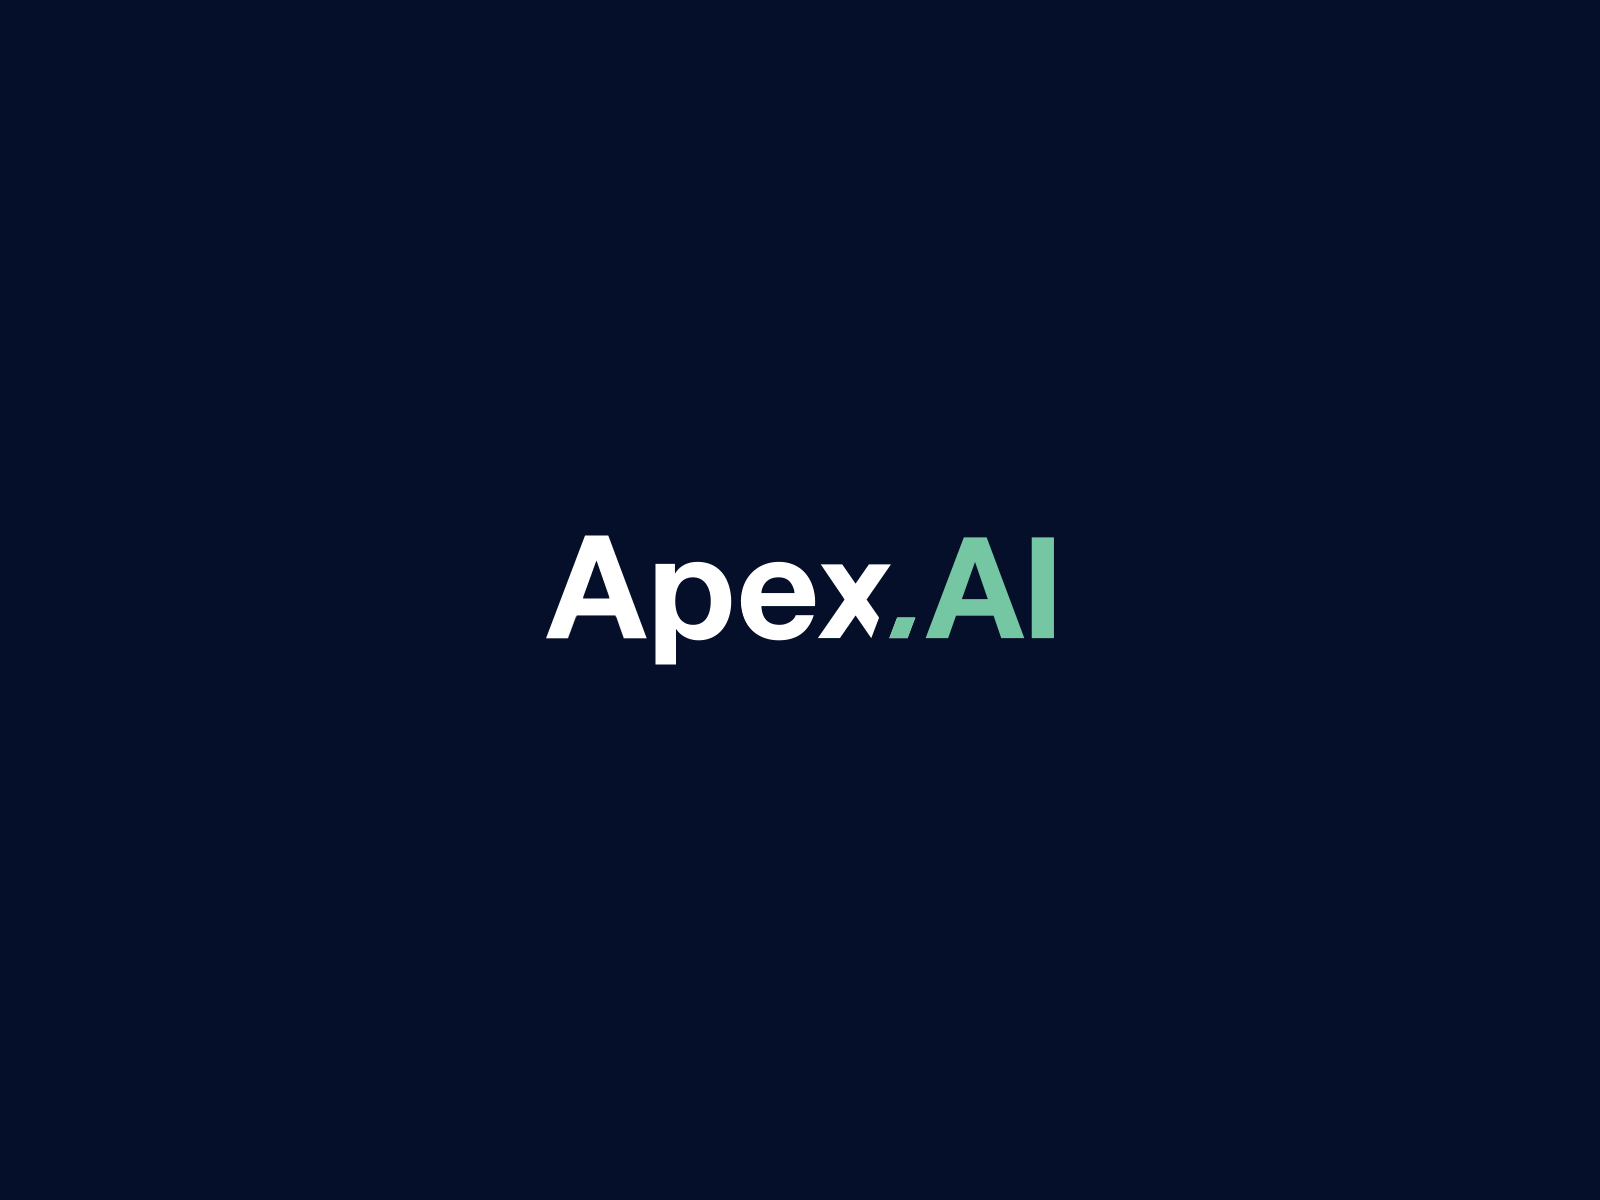 Apex.AI logo animation